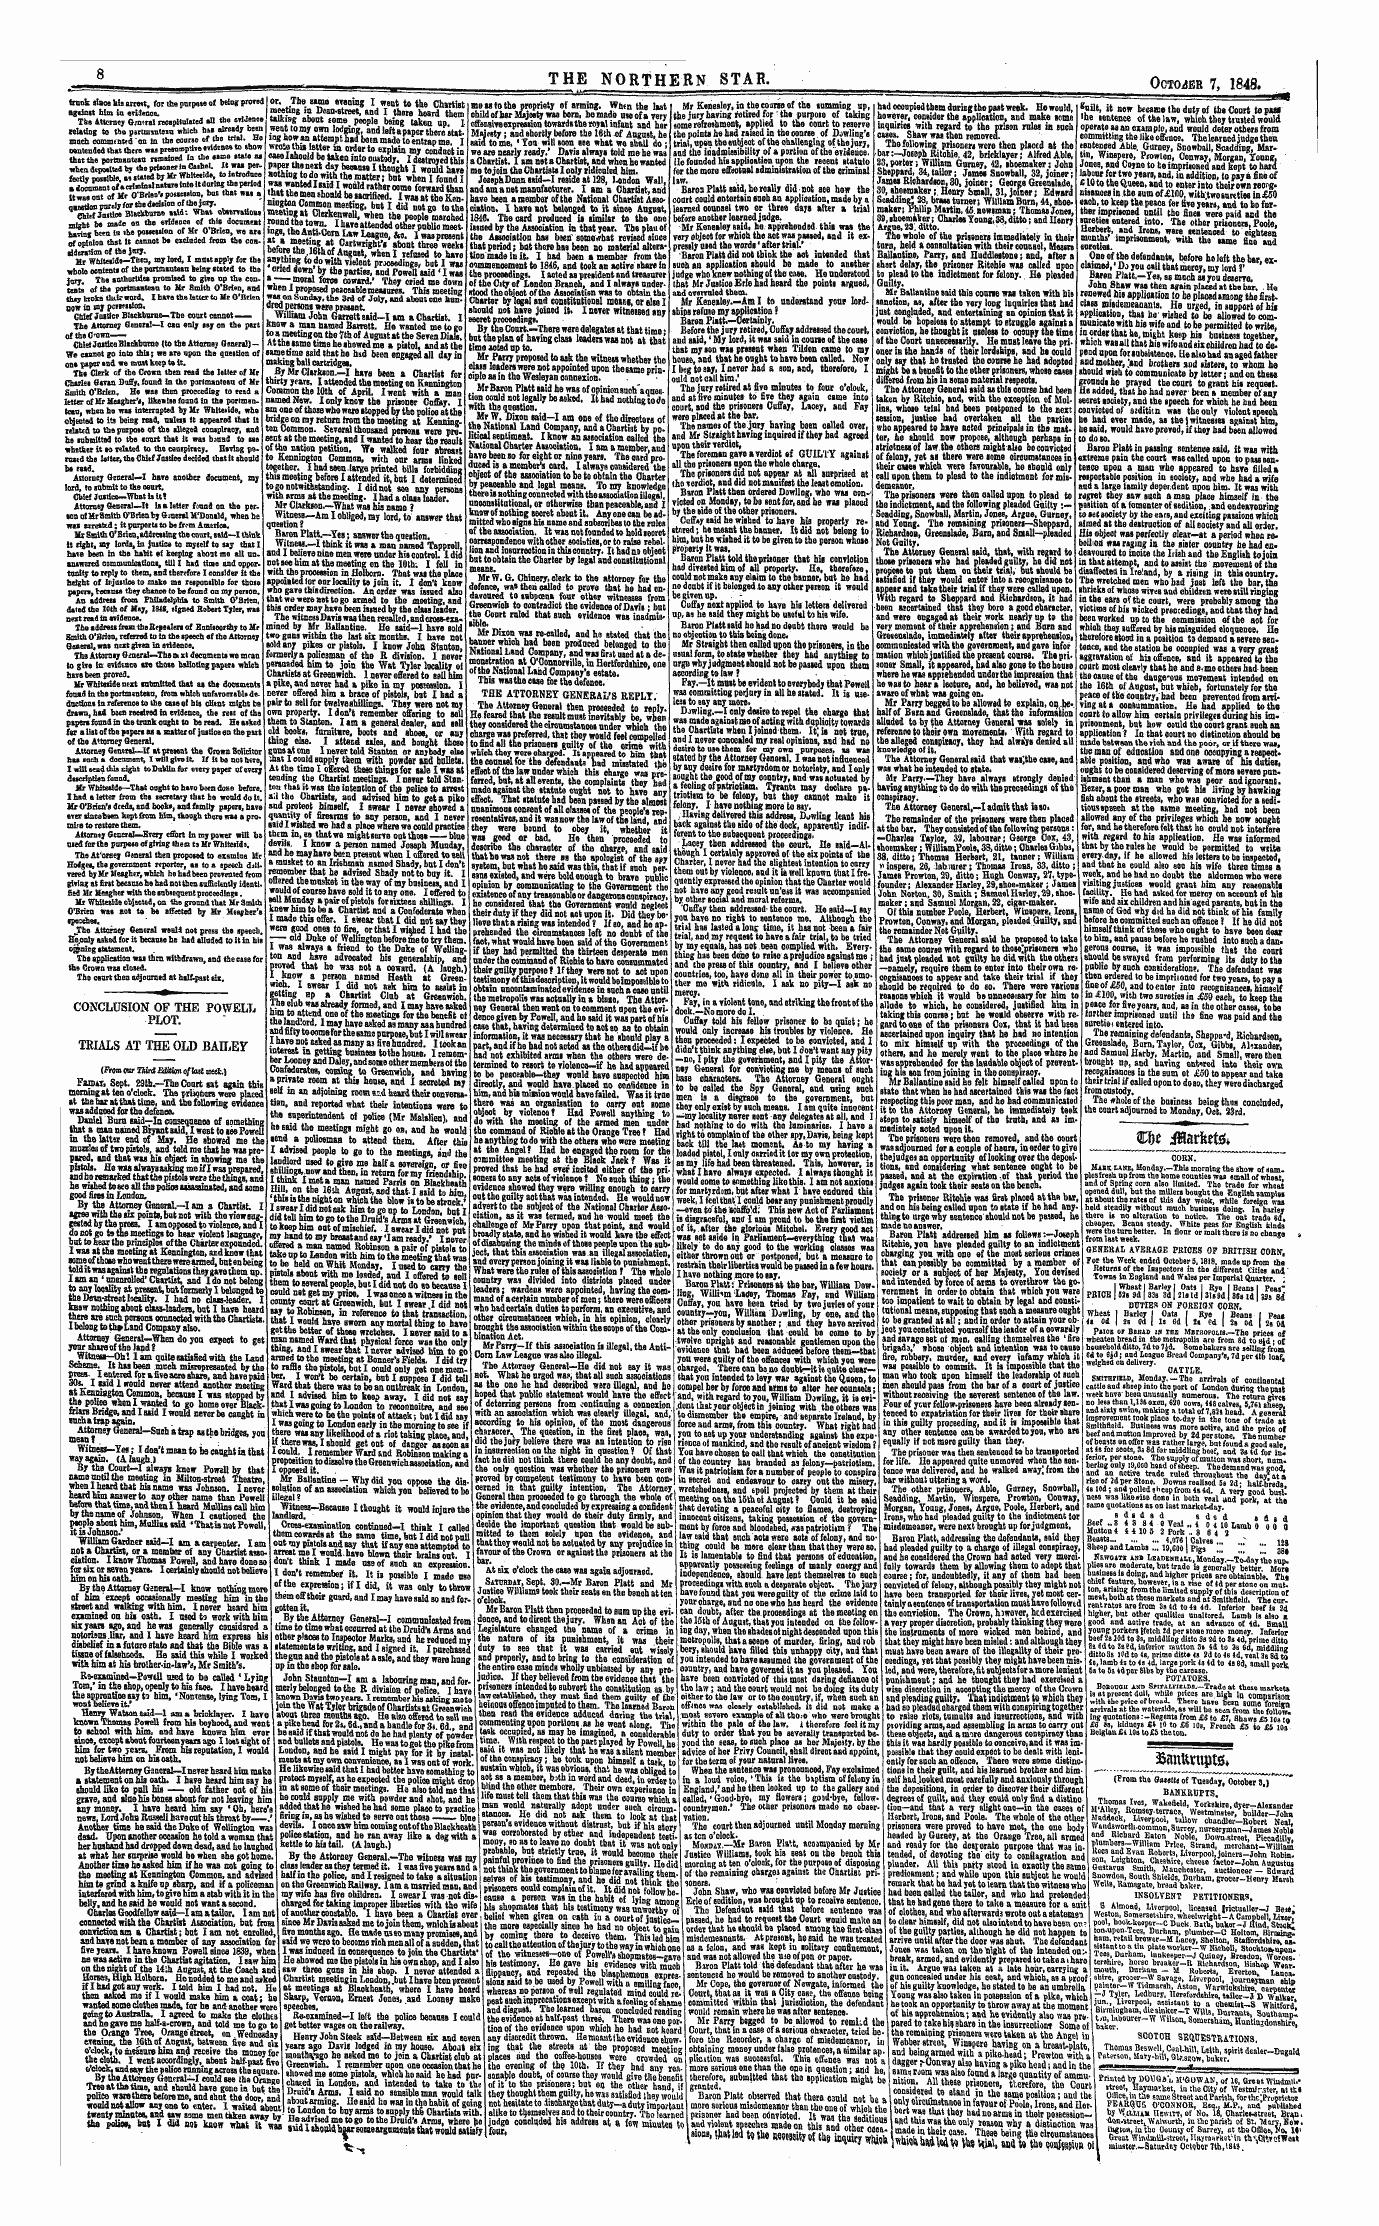 Northern Star (1837-1852): jS F Y, 1st edition - , V -"*V^Vit | Vuu^If Printed By Doug^I M'Govan, Of 16, Great Windmtl.'